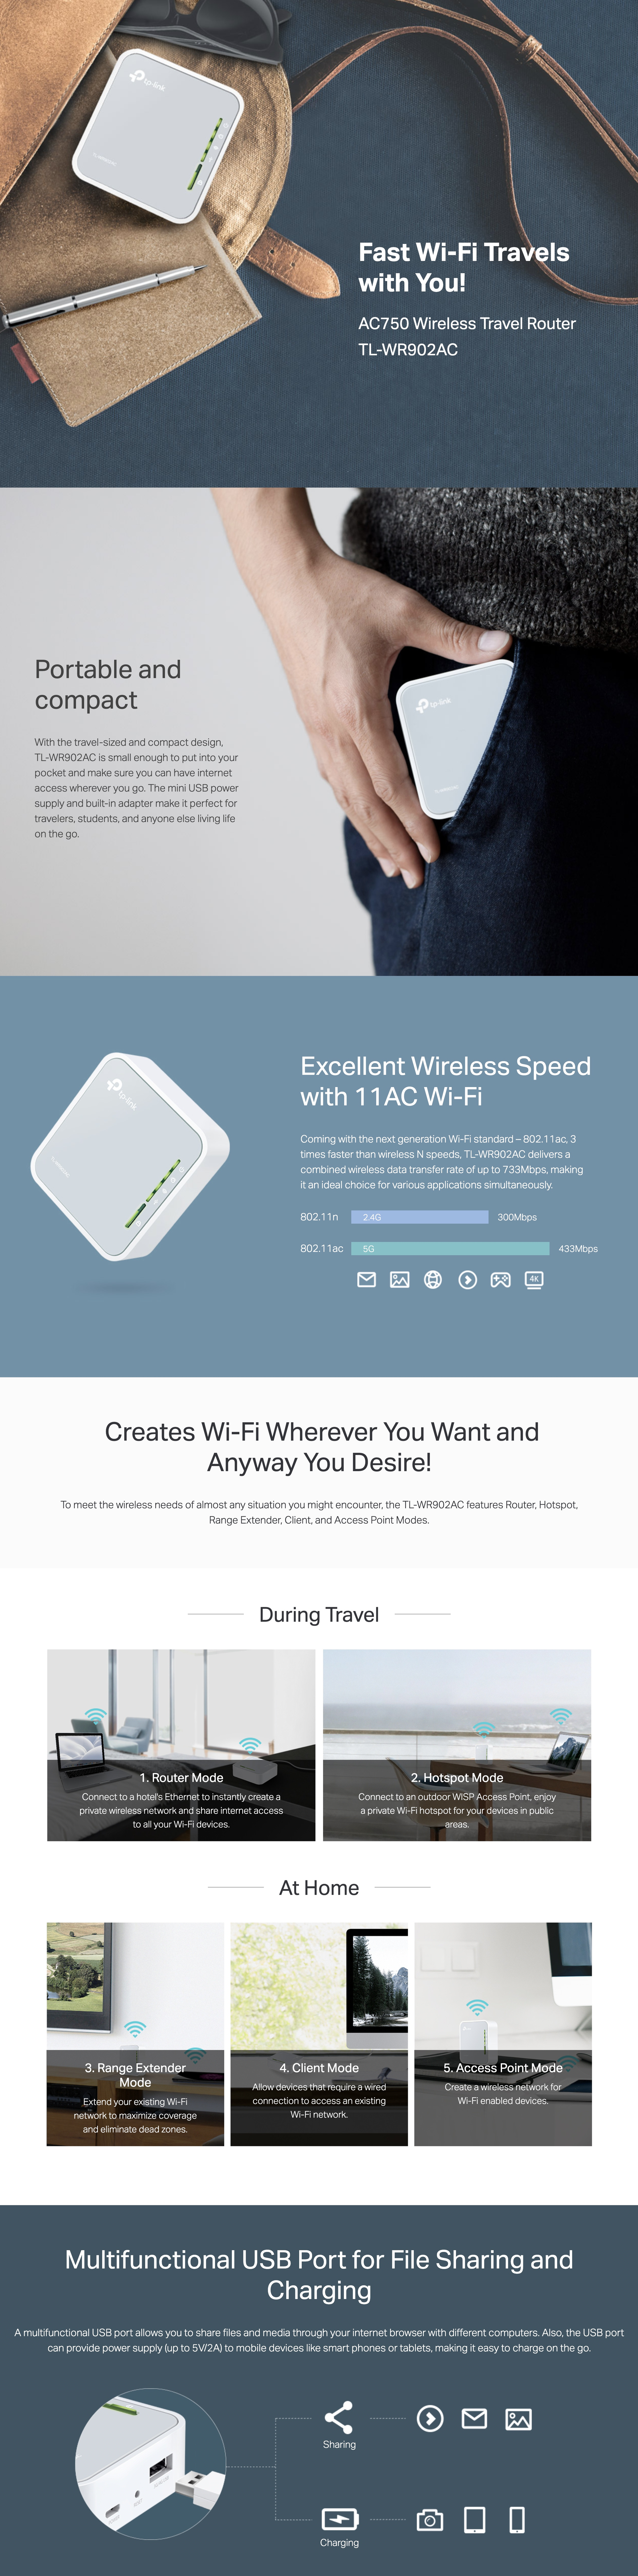 TP-Link-TL-WR902AC-AC750-Wireless-Travel-Router-Description